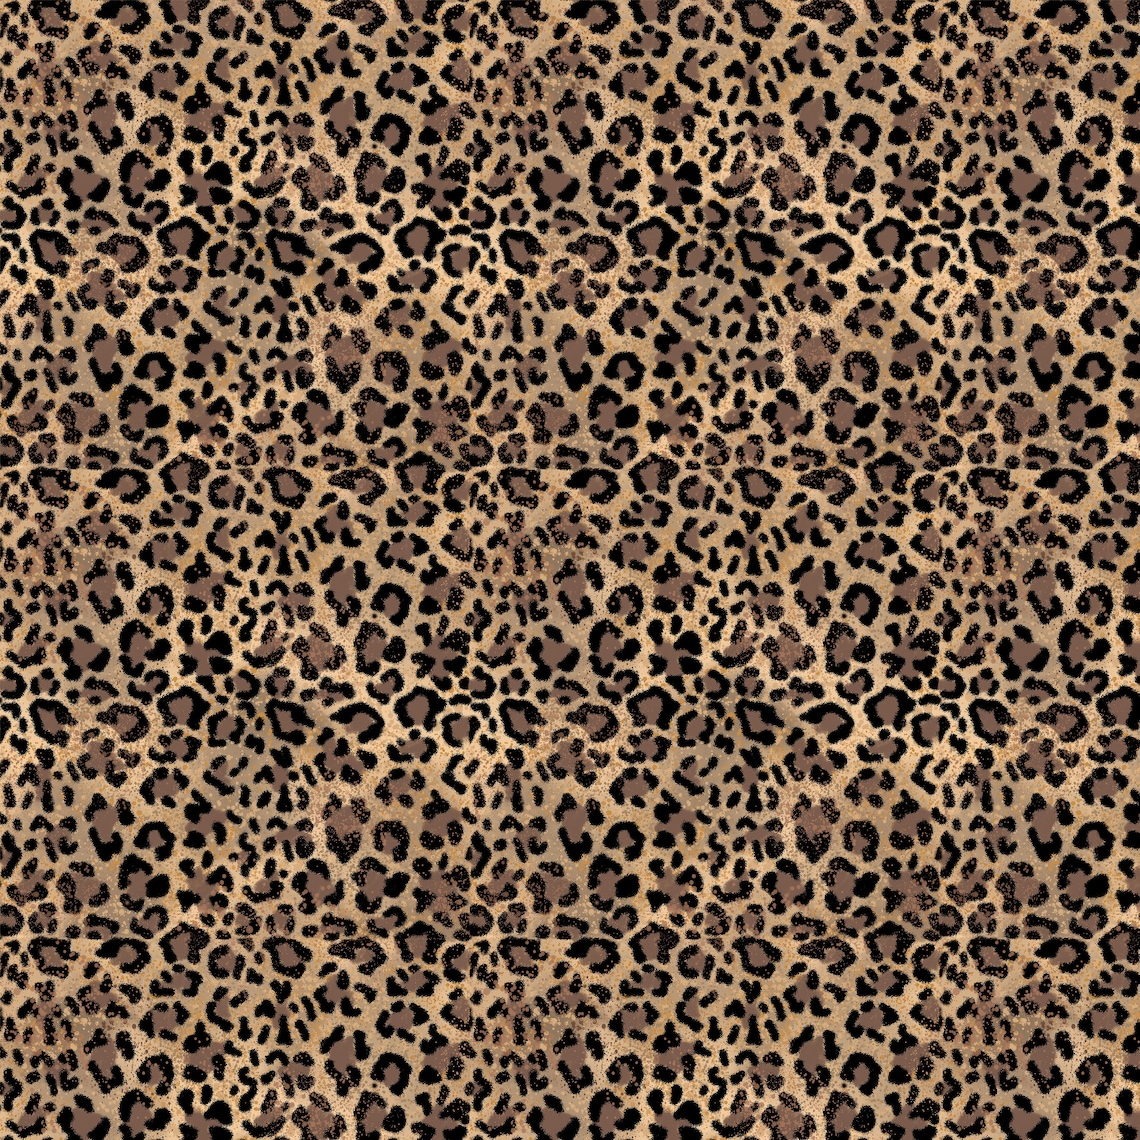 12 X 12 Cheetah Newest Decal Vinyl Animal Print | Etsy